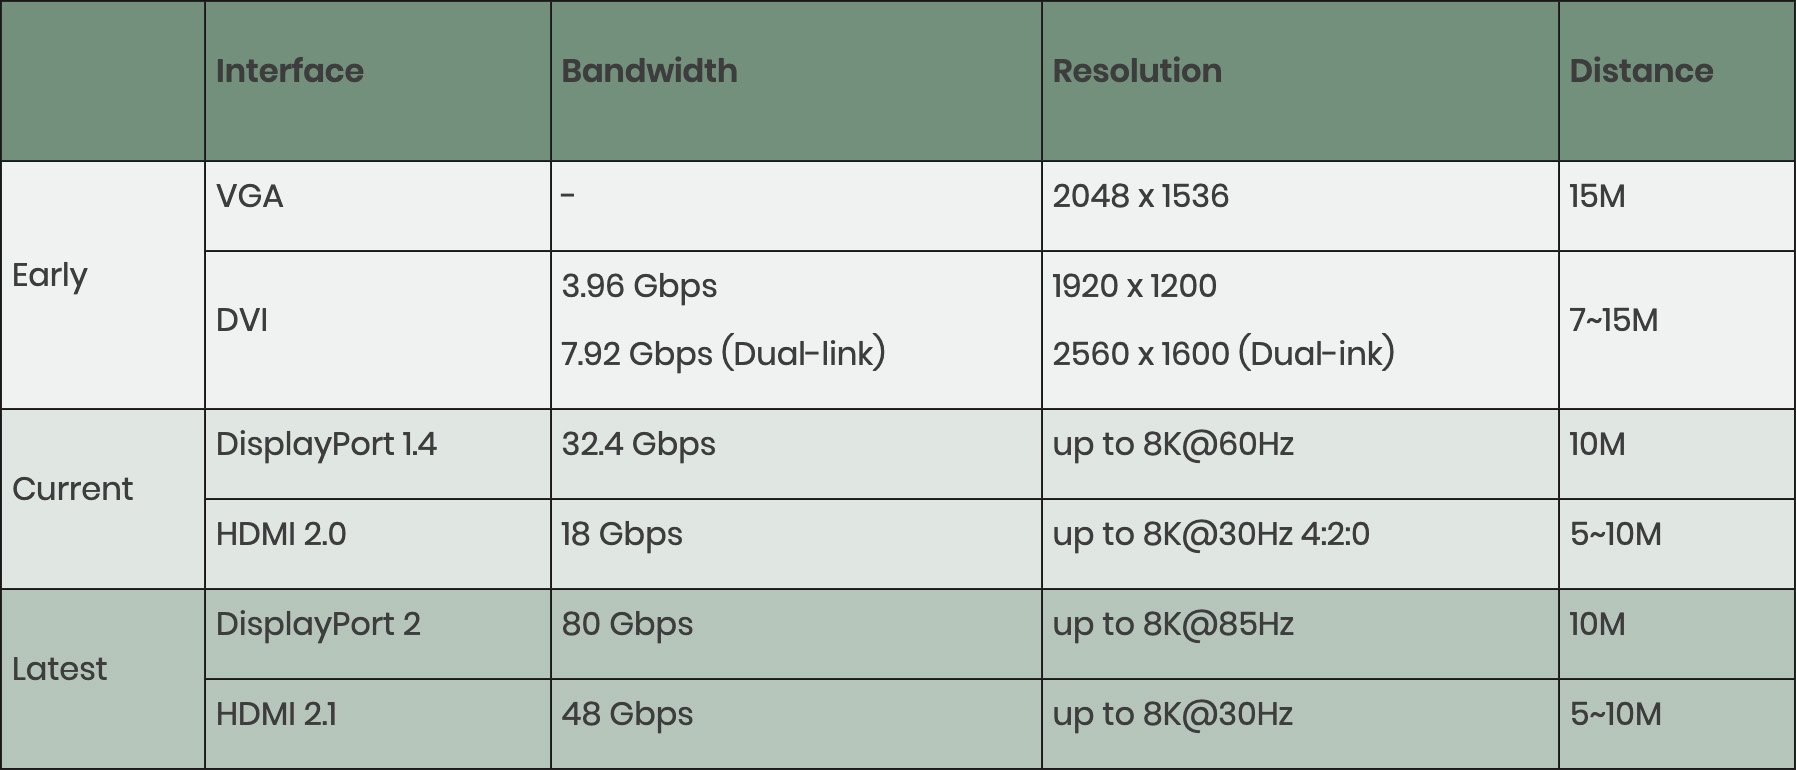 HDMI vs. DisplayPort: Which display interface reigns supreme?